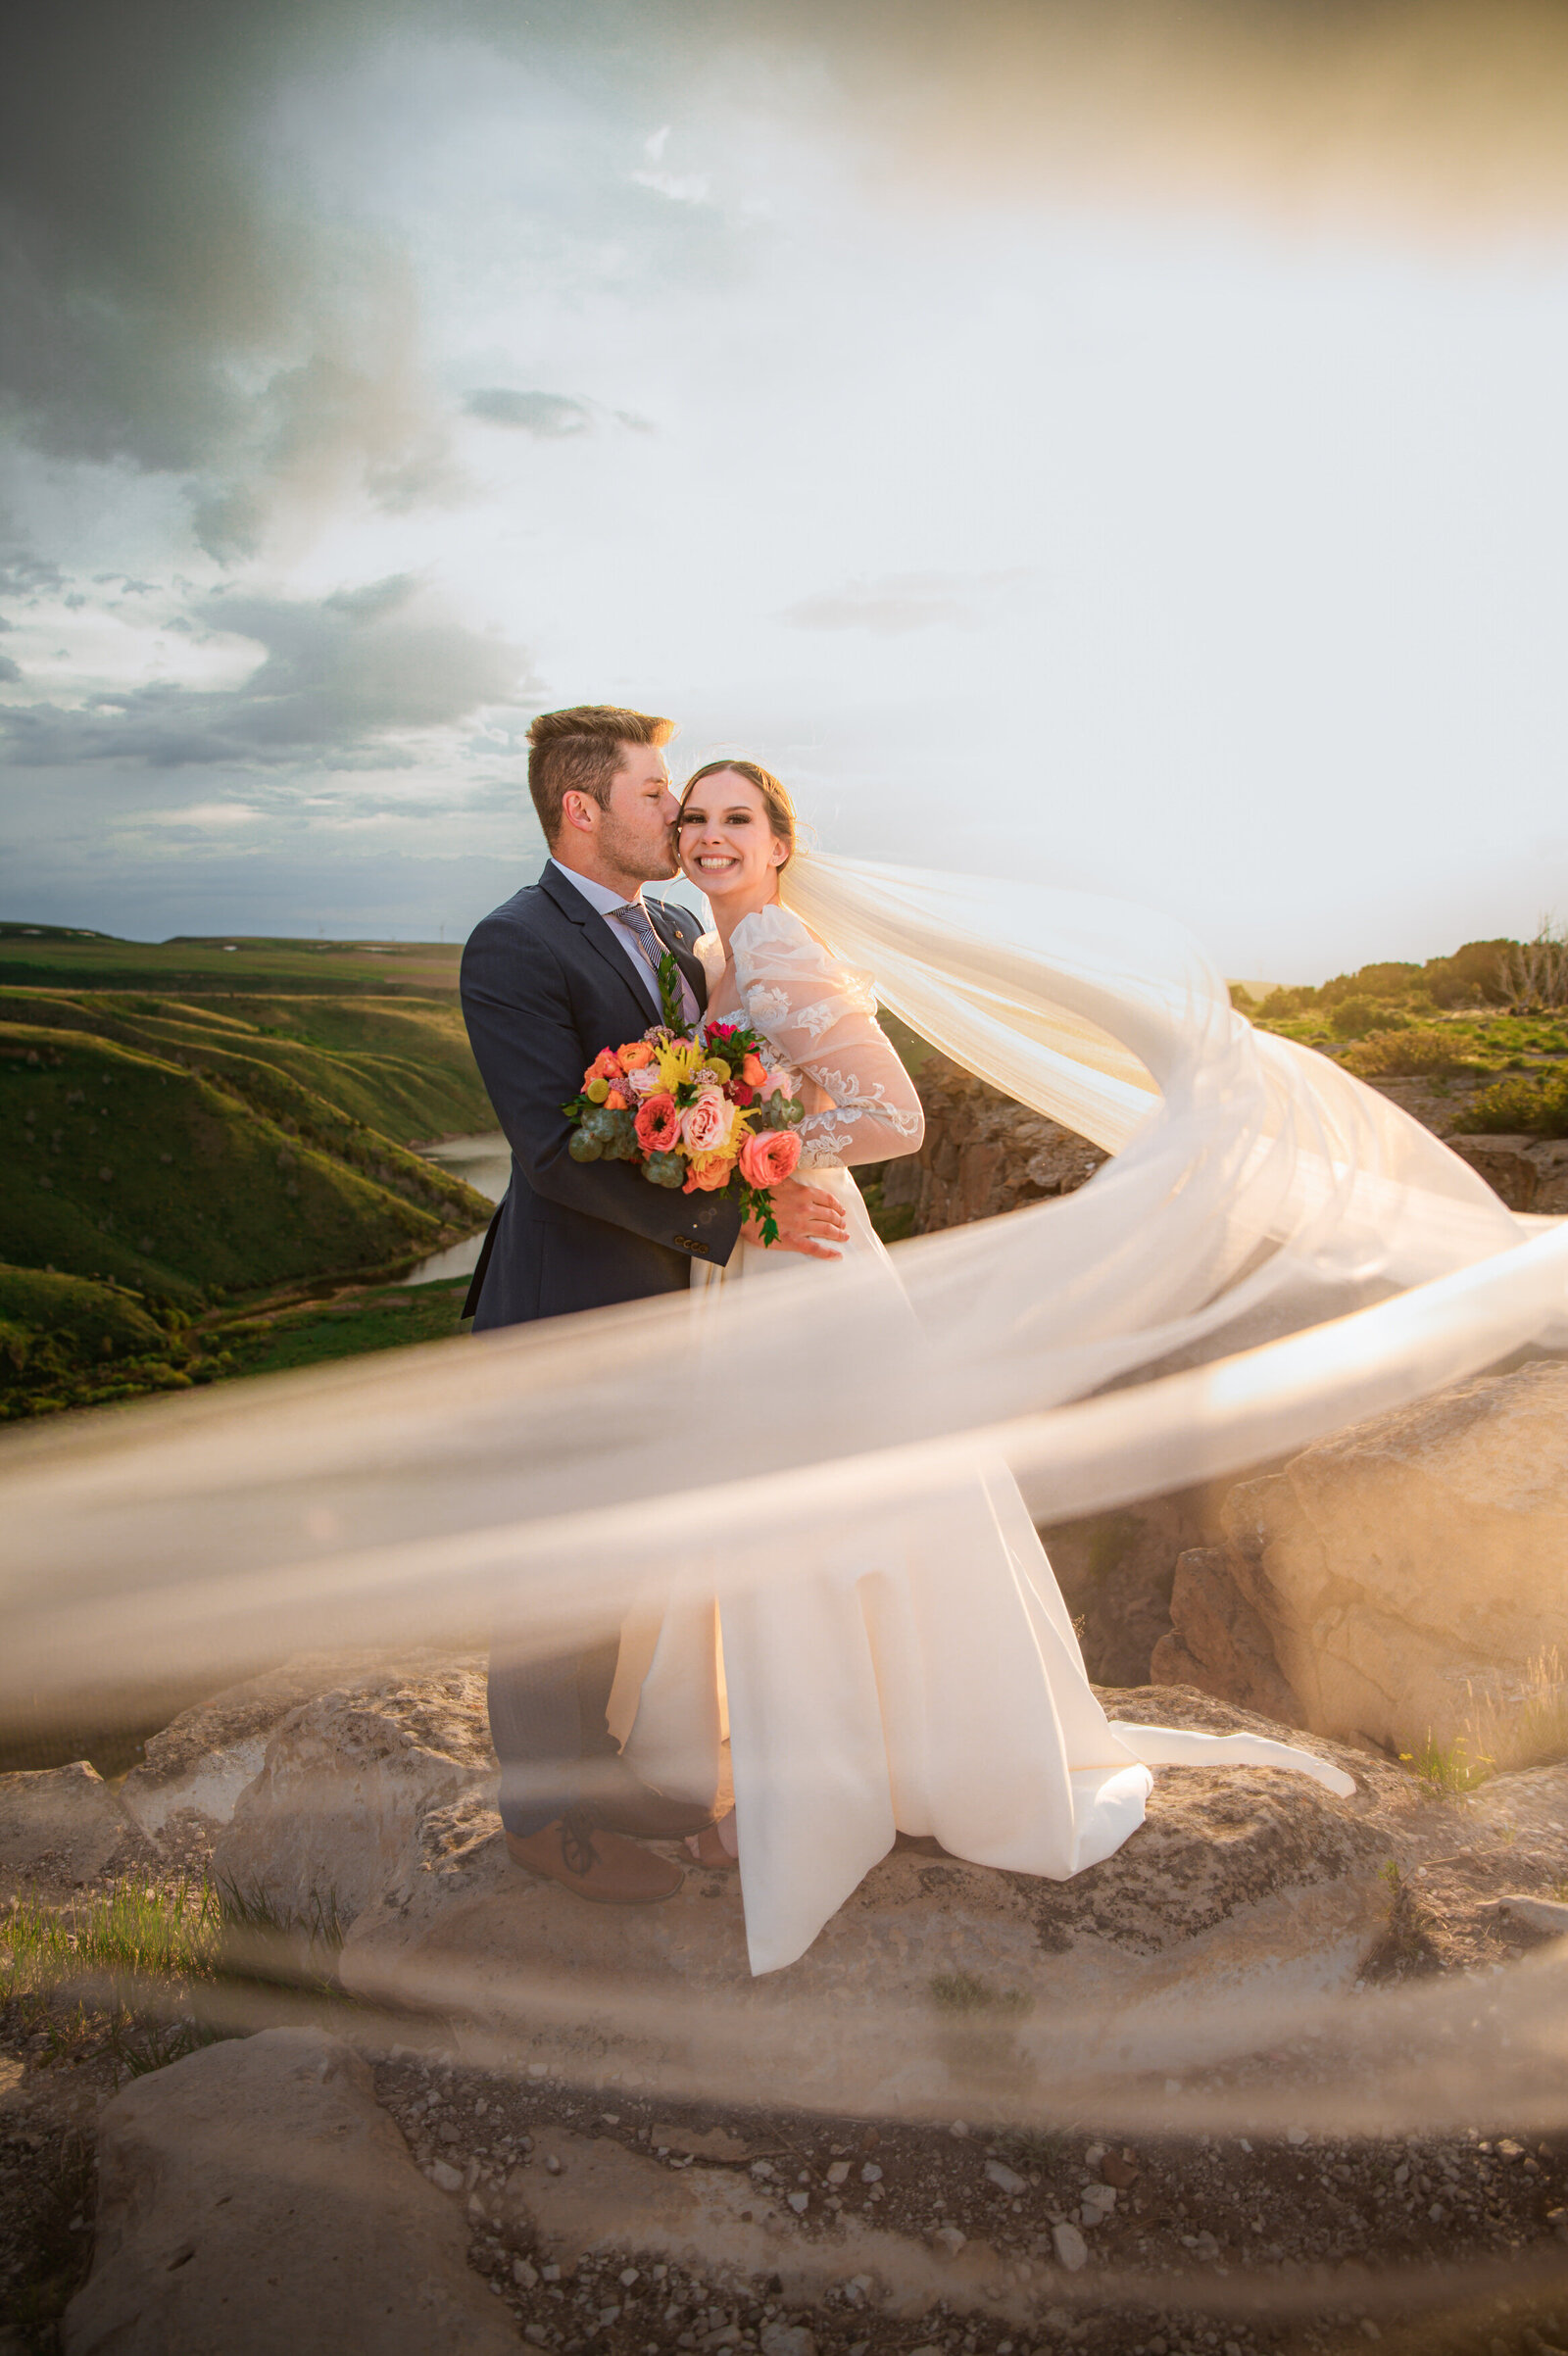 Jackson Hole photographers capture couple with veil during bridal portraits